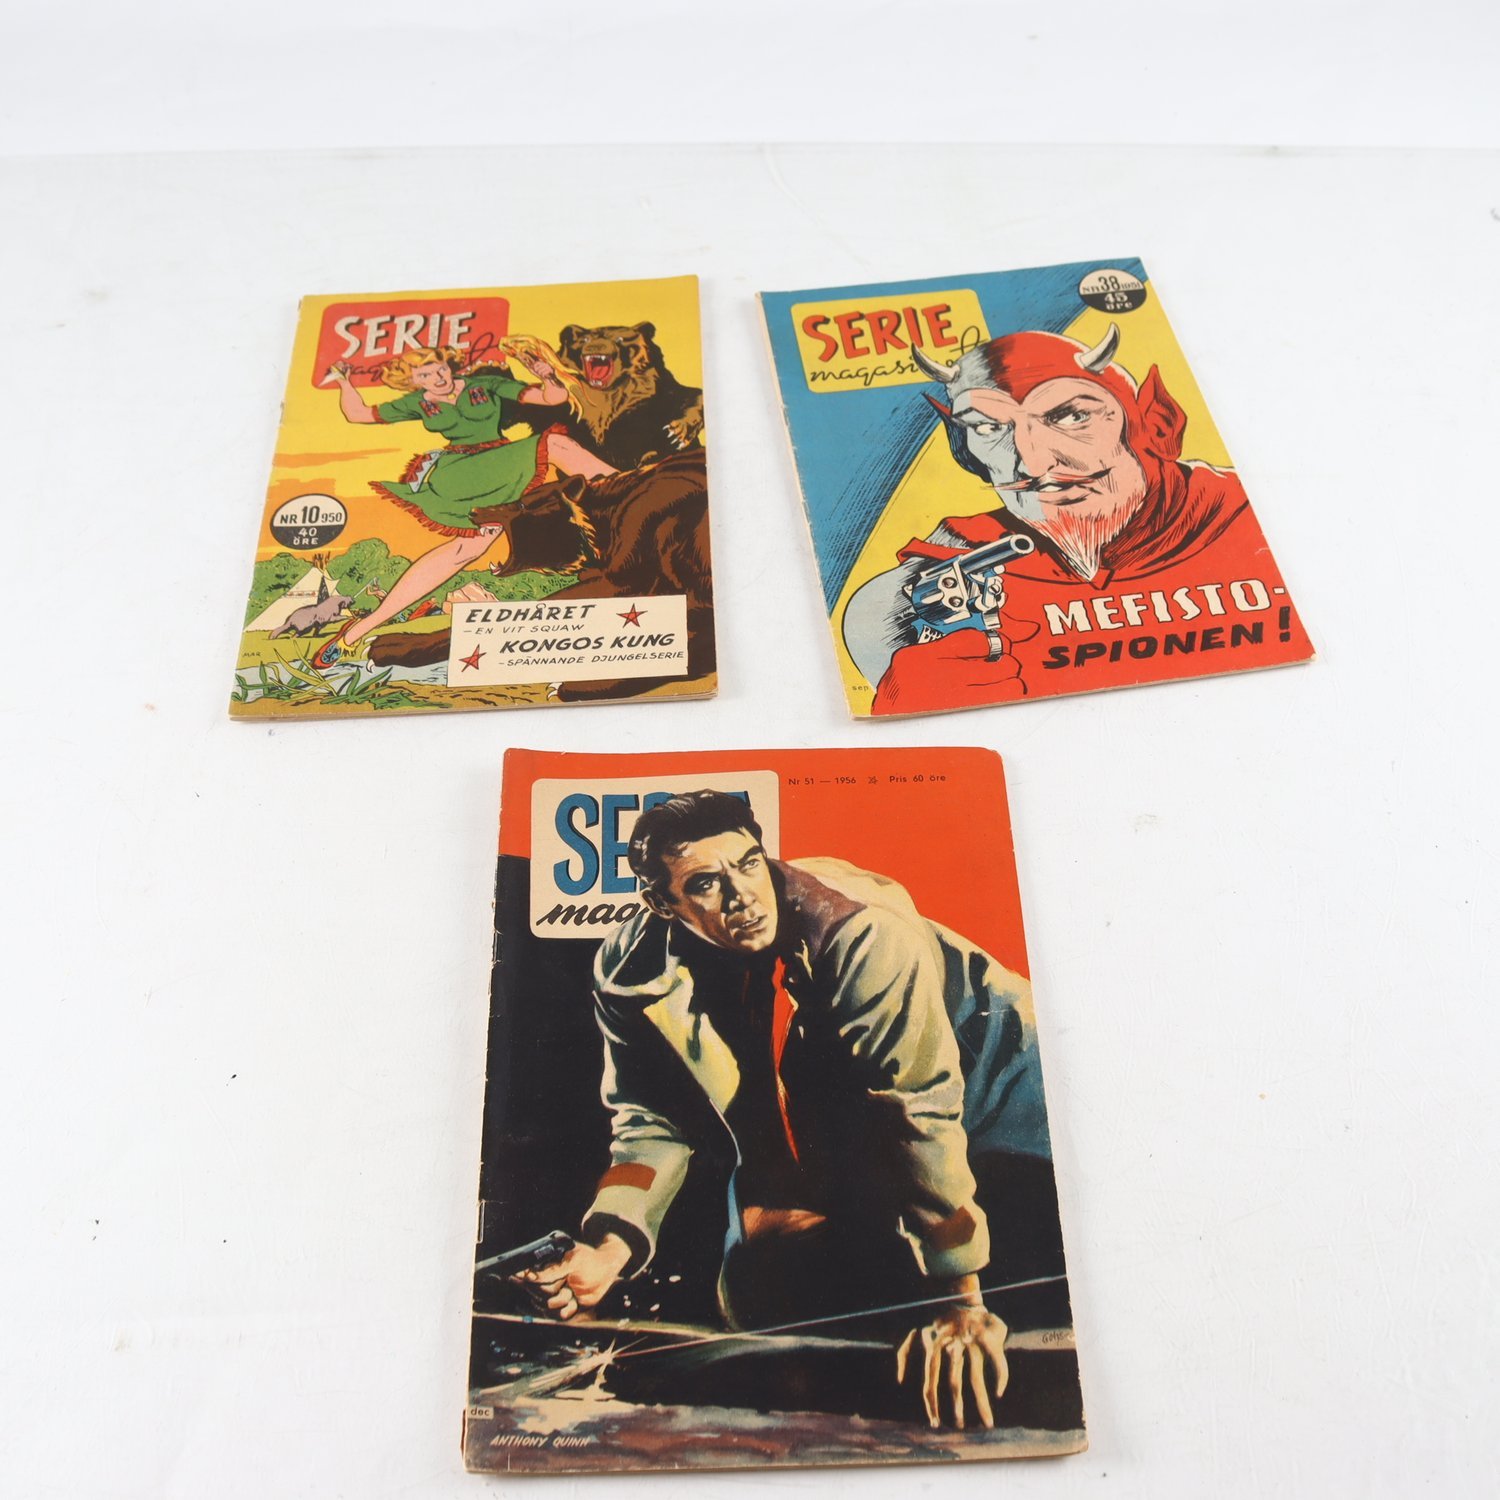 Seriemagasinet Nr. 10 1951, Nr. 38 1951 & Nr. 51 1956